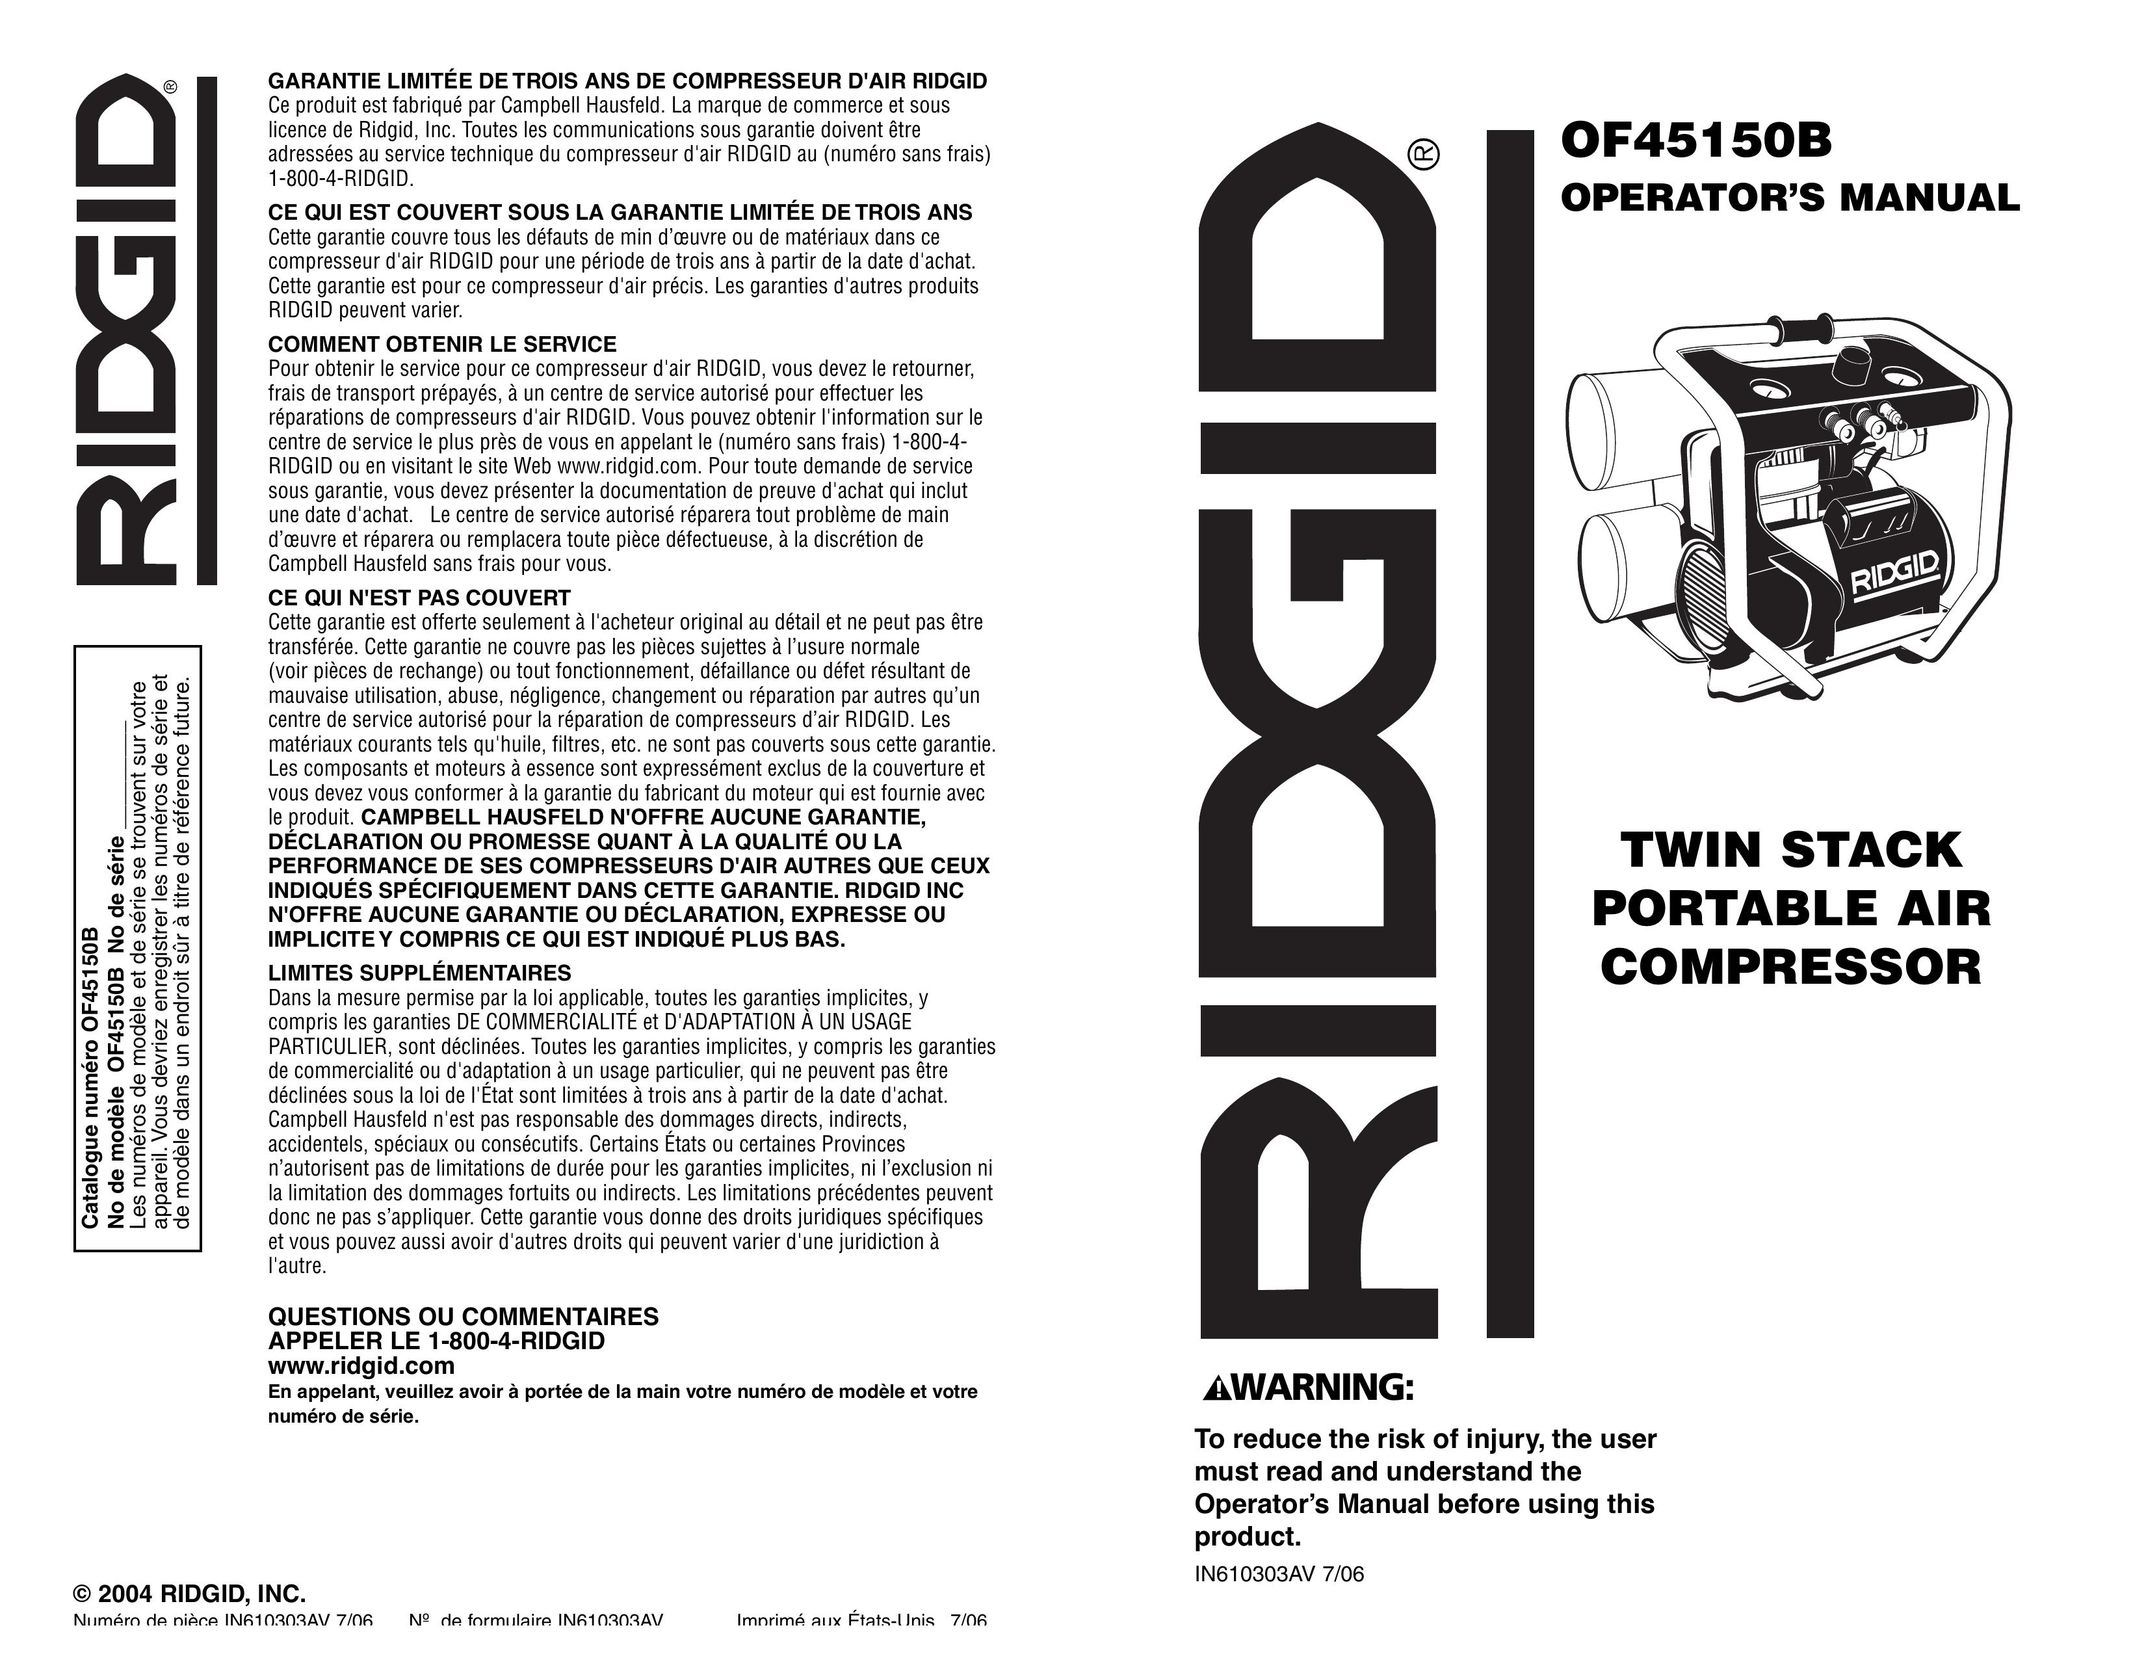 RIDGID OF45150B Air Compressor User Manual